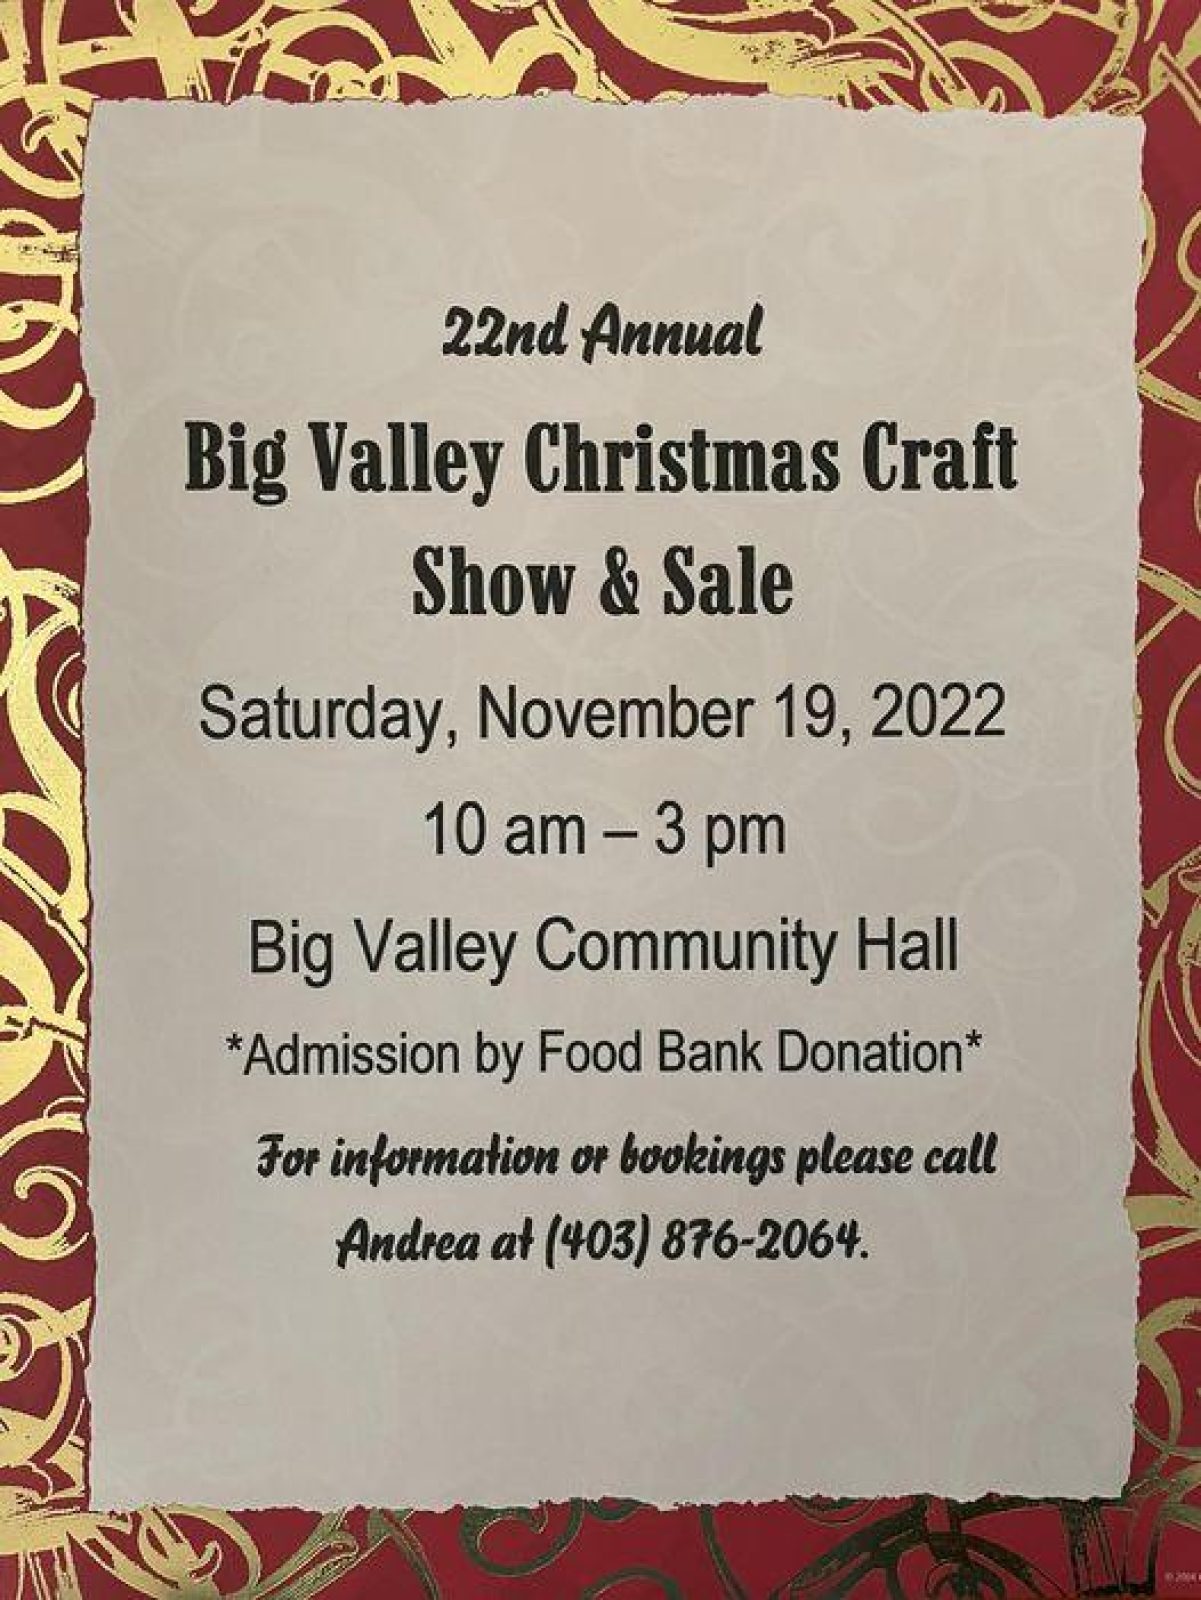 Bv chrismas craft show and sale